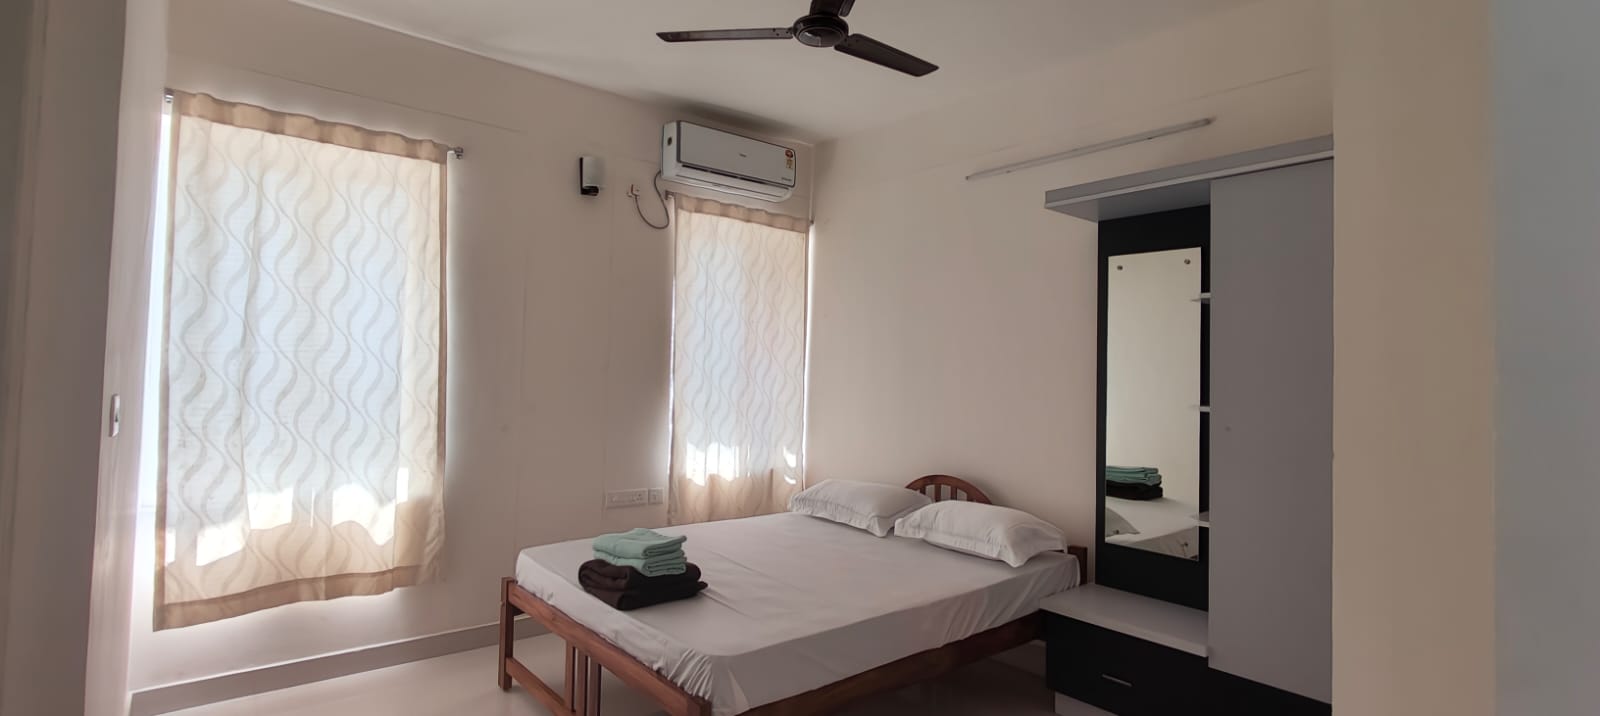 Serviced Apartments near Medical College Trivandrum - Hobiz, Trivandrum